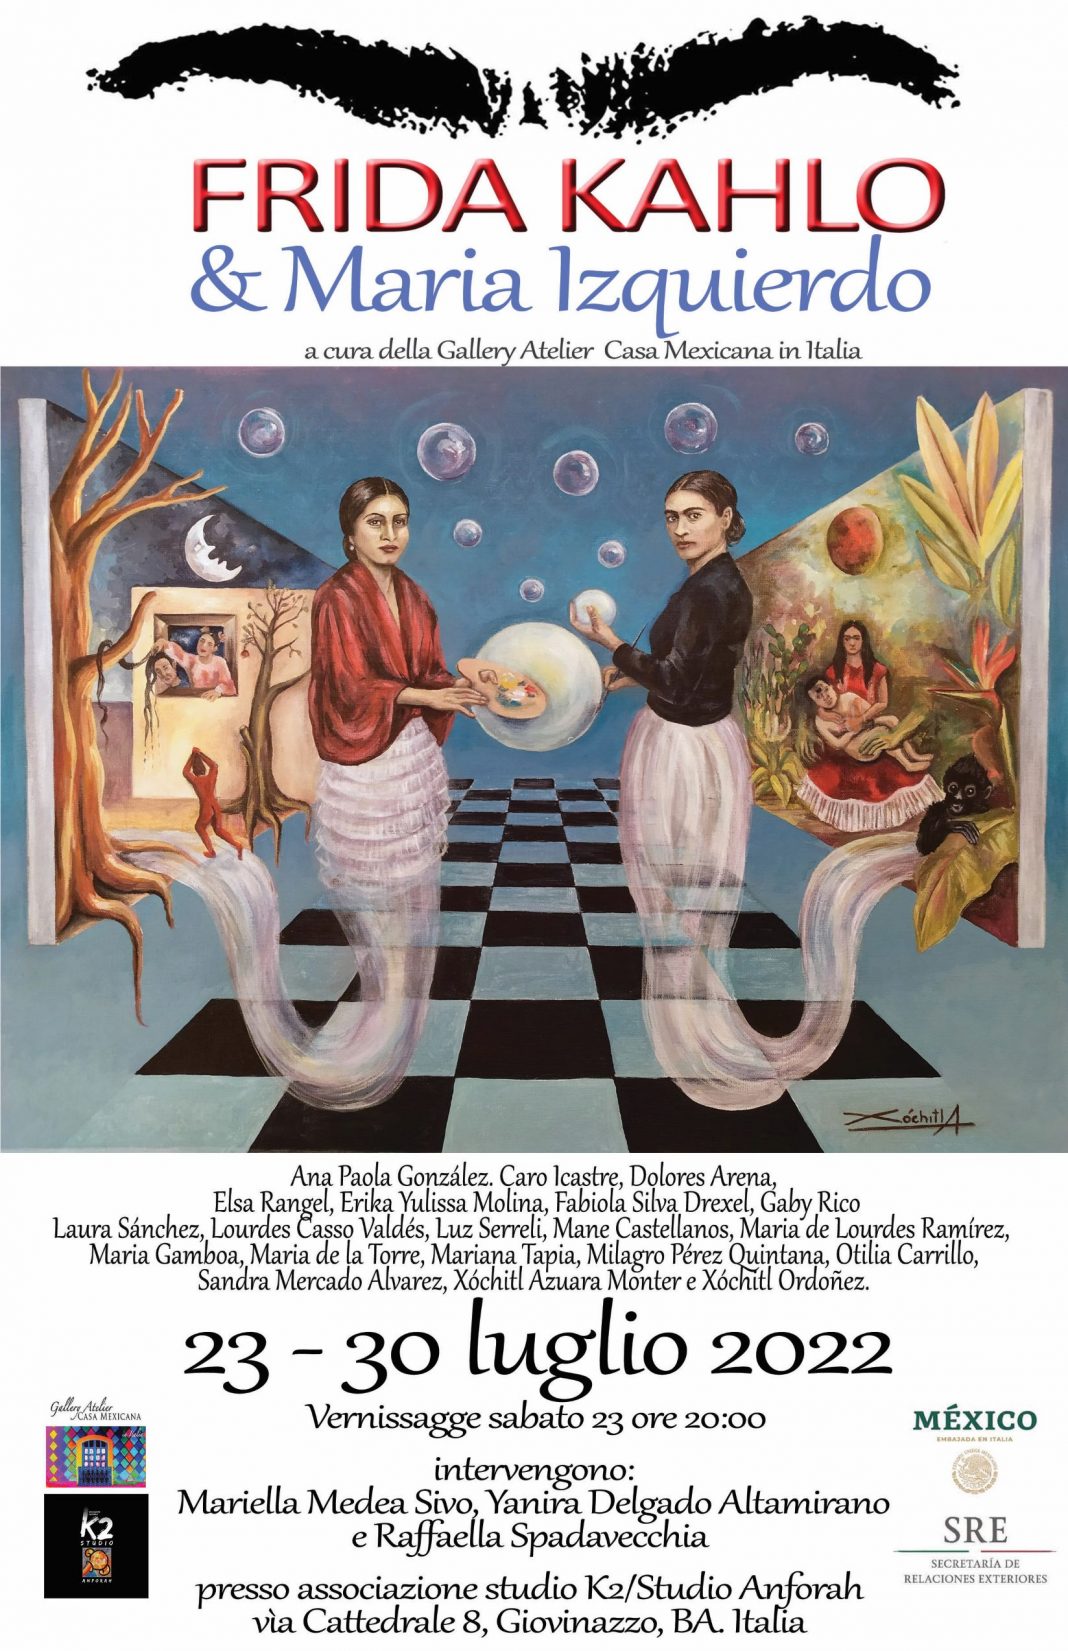 Festival Frida Kahlo. Ali per volare 2022https://www.exibart.com/repository/media/formidable/11/img/8b5/collettiva-2022-GACM-FESTIVAL-FRIDA-KAHLO-Maria-izquierdo_1_7MB-1068x1651.jpg